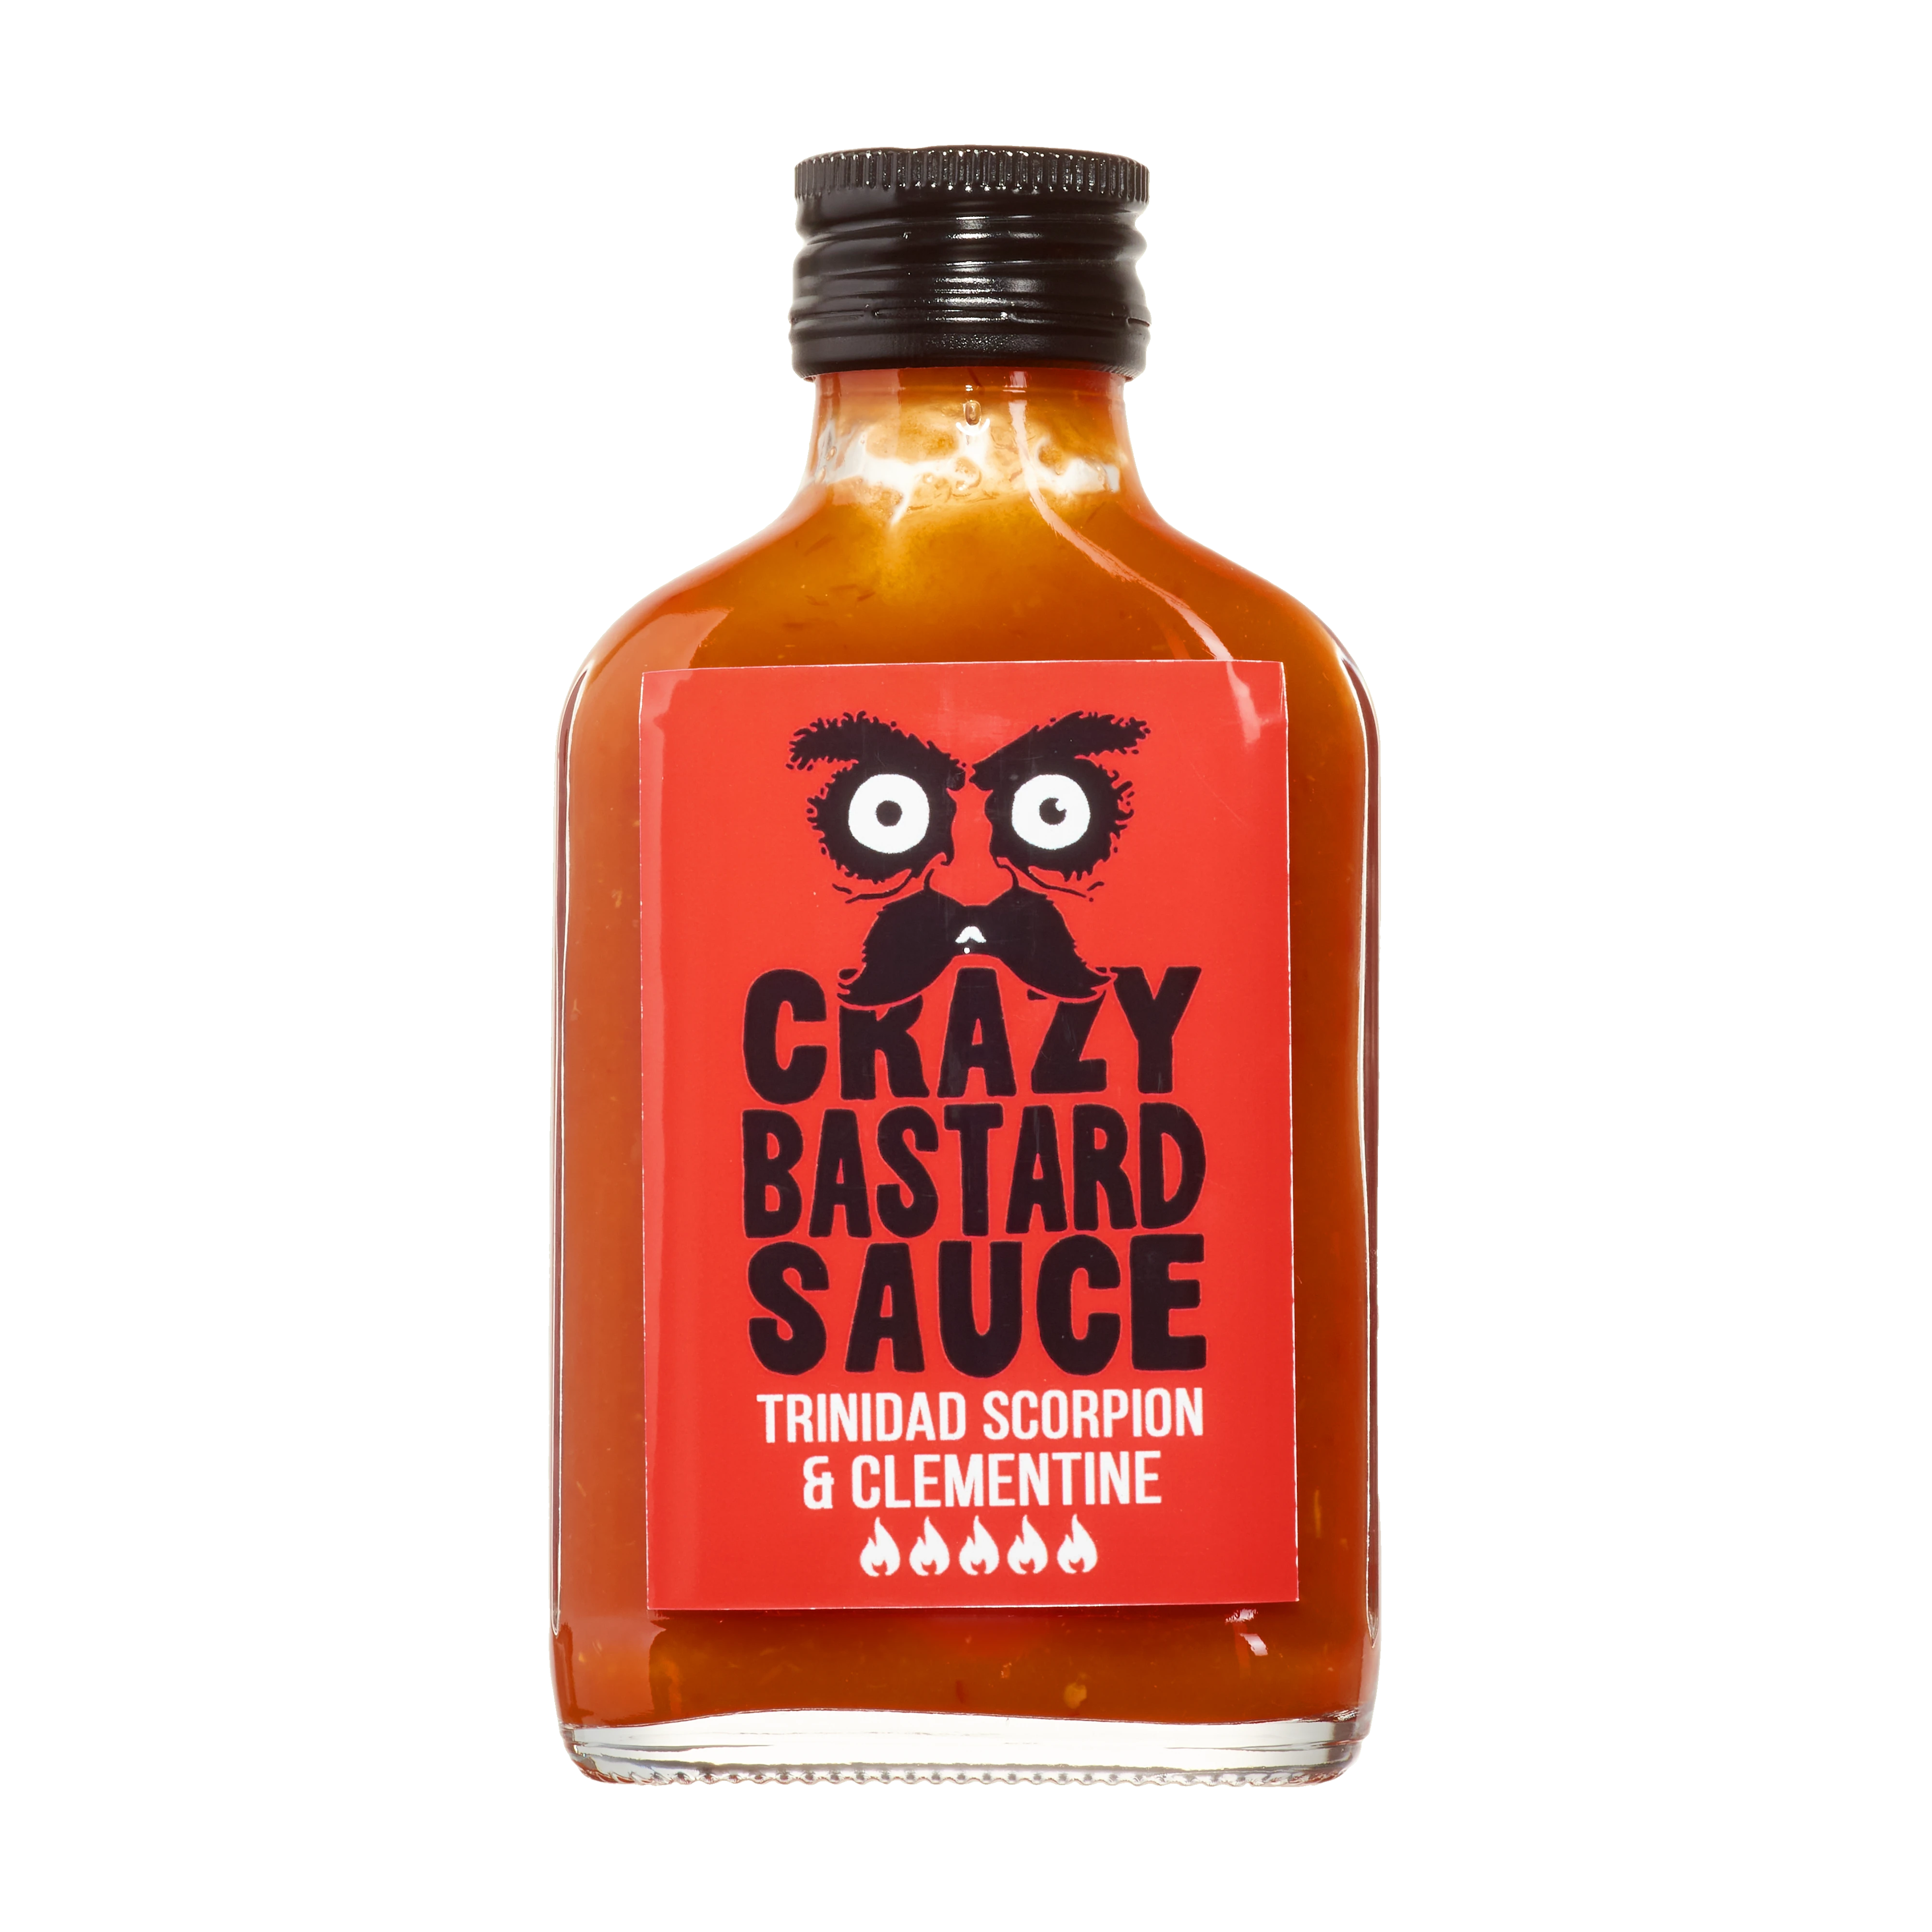 Crazy Bastard Trinidad Scorpion & Clementine Sauce  